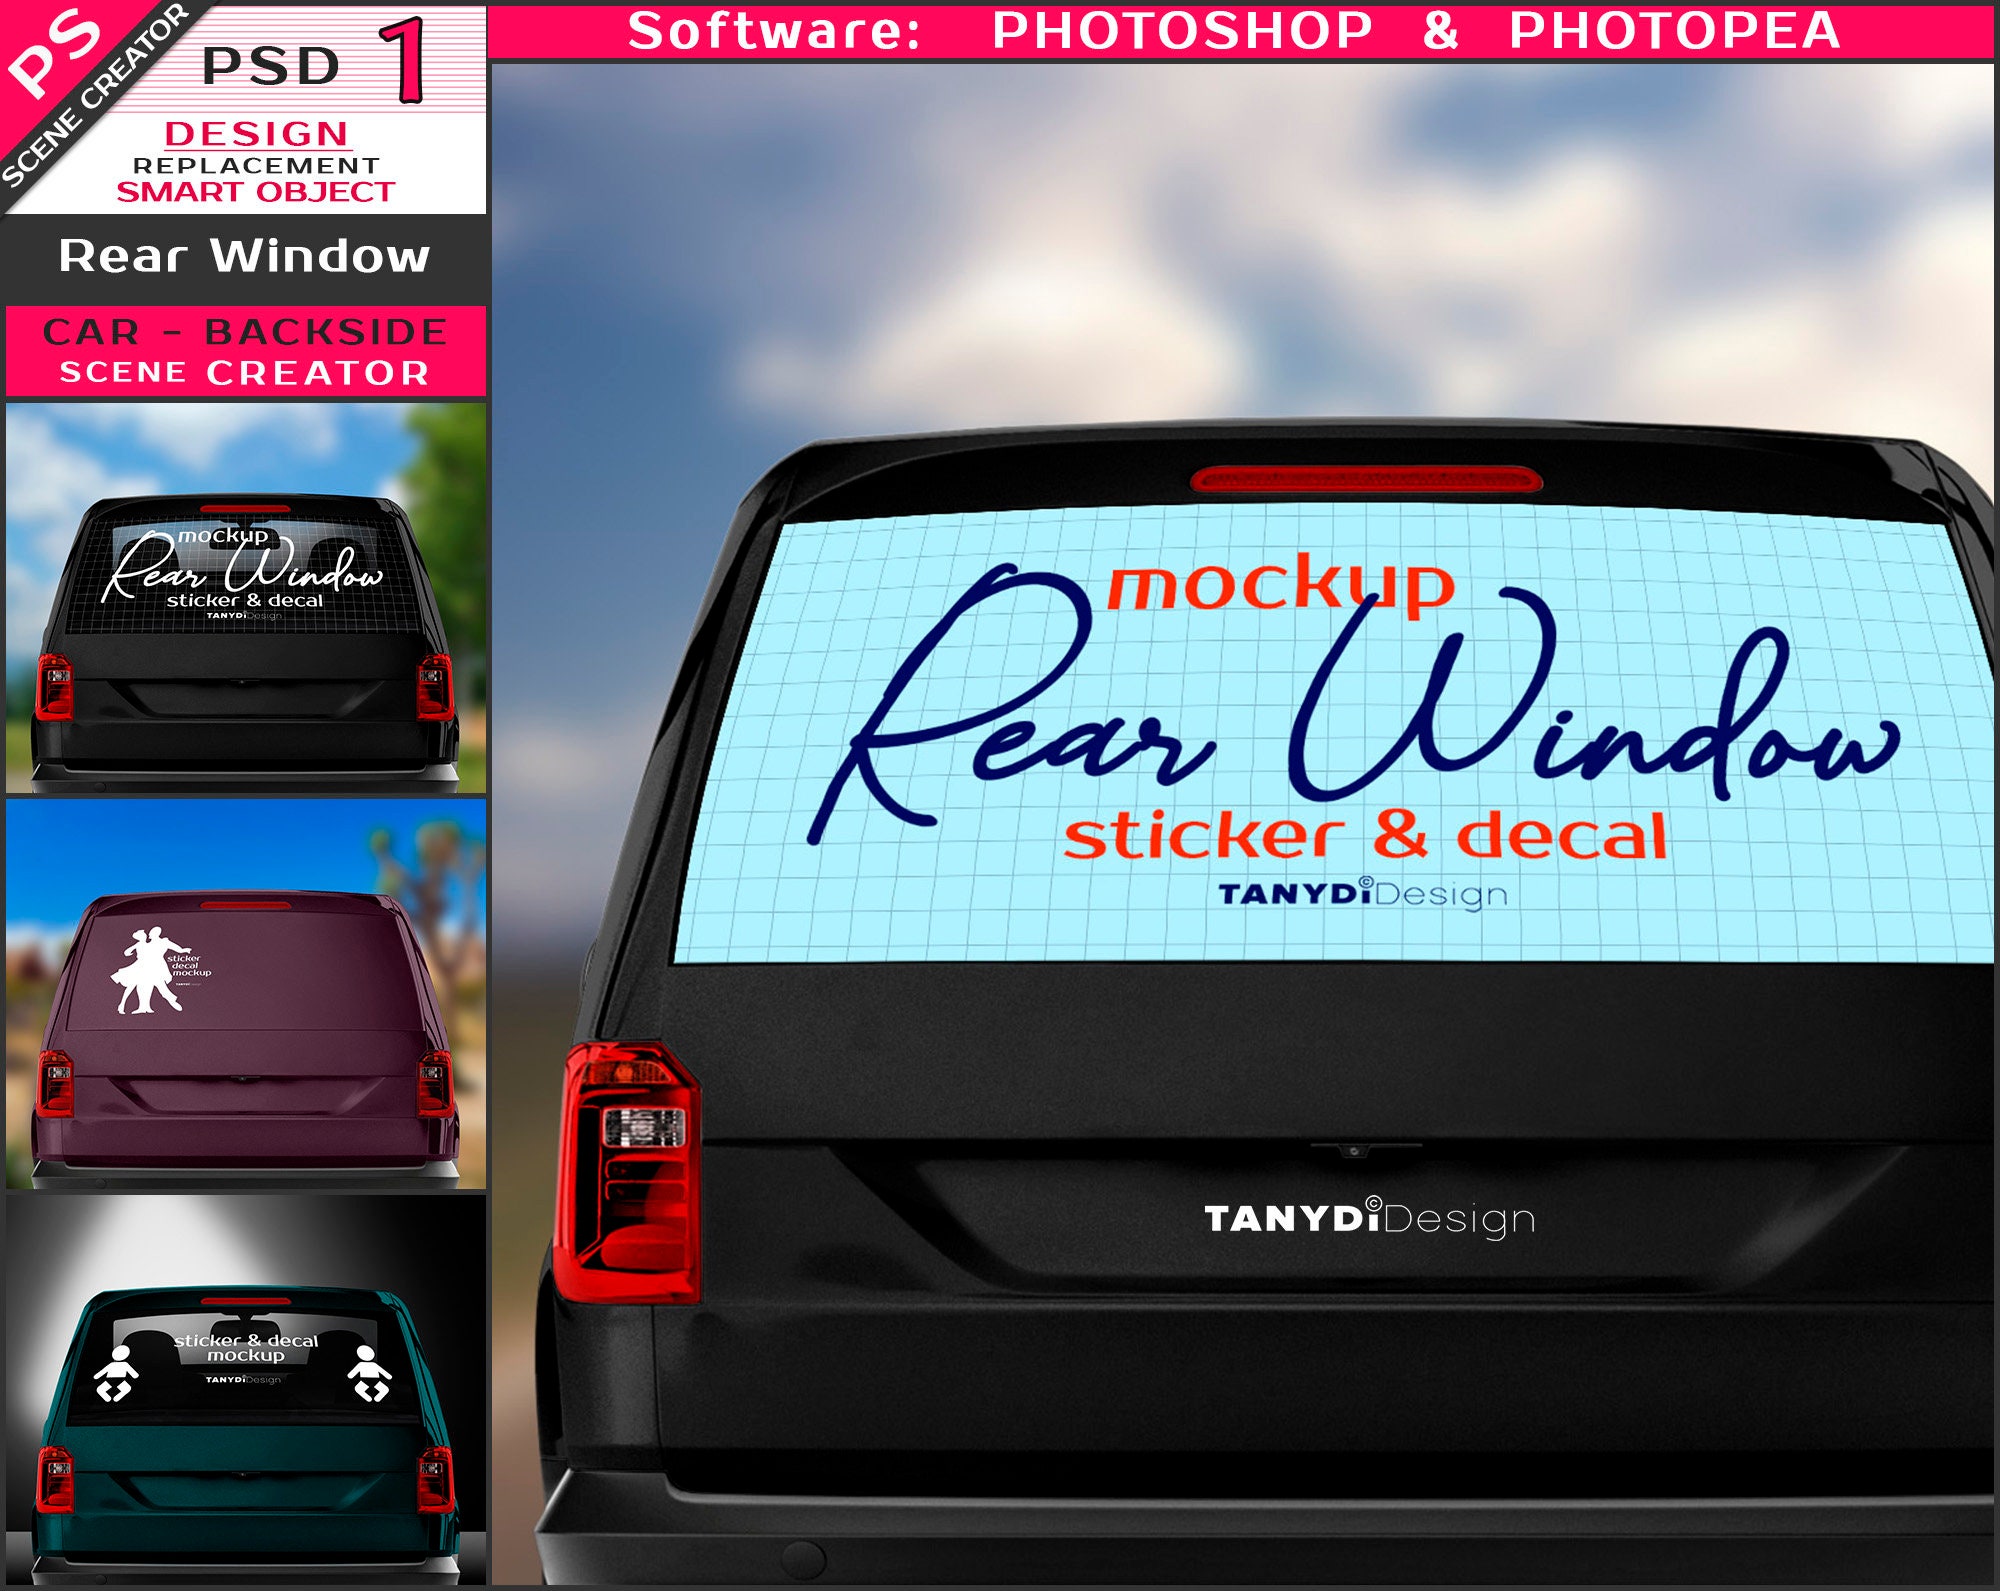 Black Car Rear Window, Photoshop Photopea Sticker Decal Mockup, Glass Window  & Metal Backside, Outdoor Scenes RW-1 